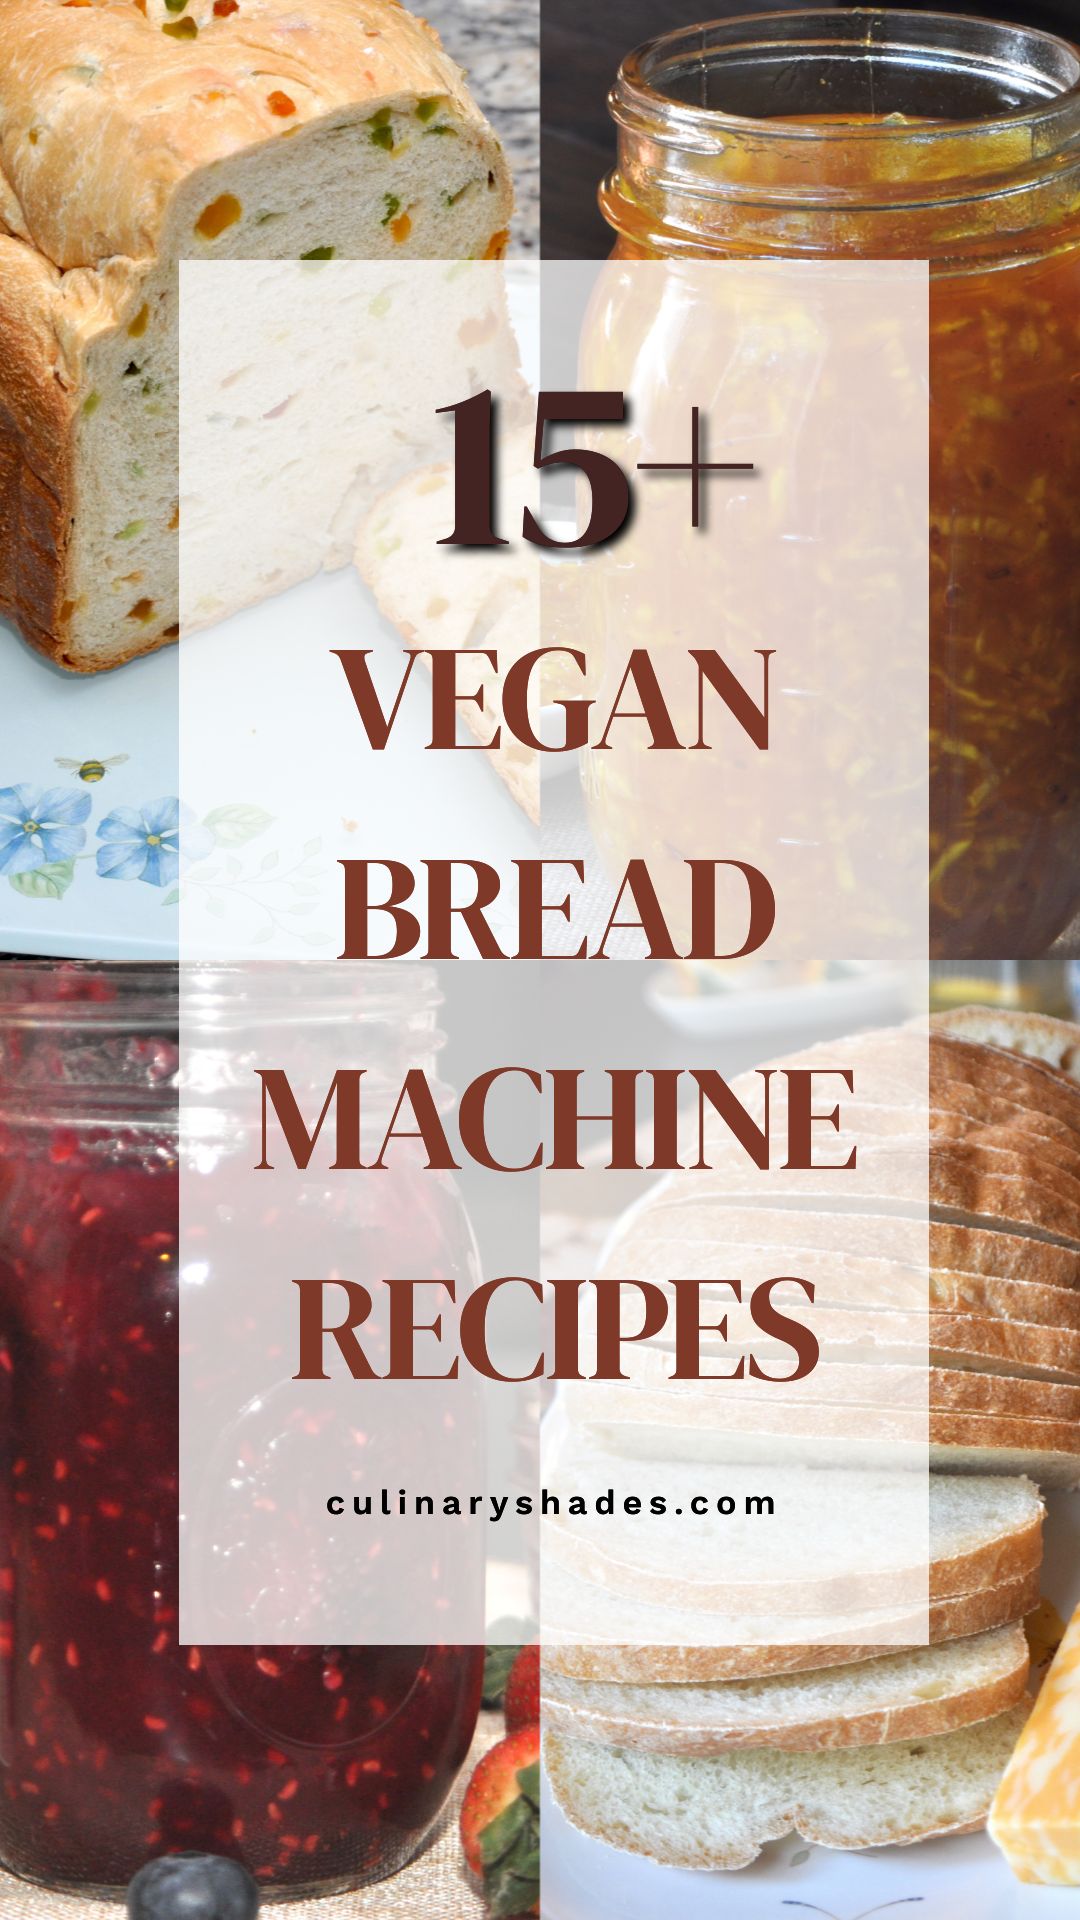 Vegan Bread Machine Recipes pin.